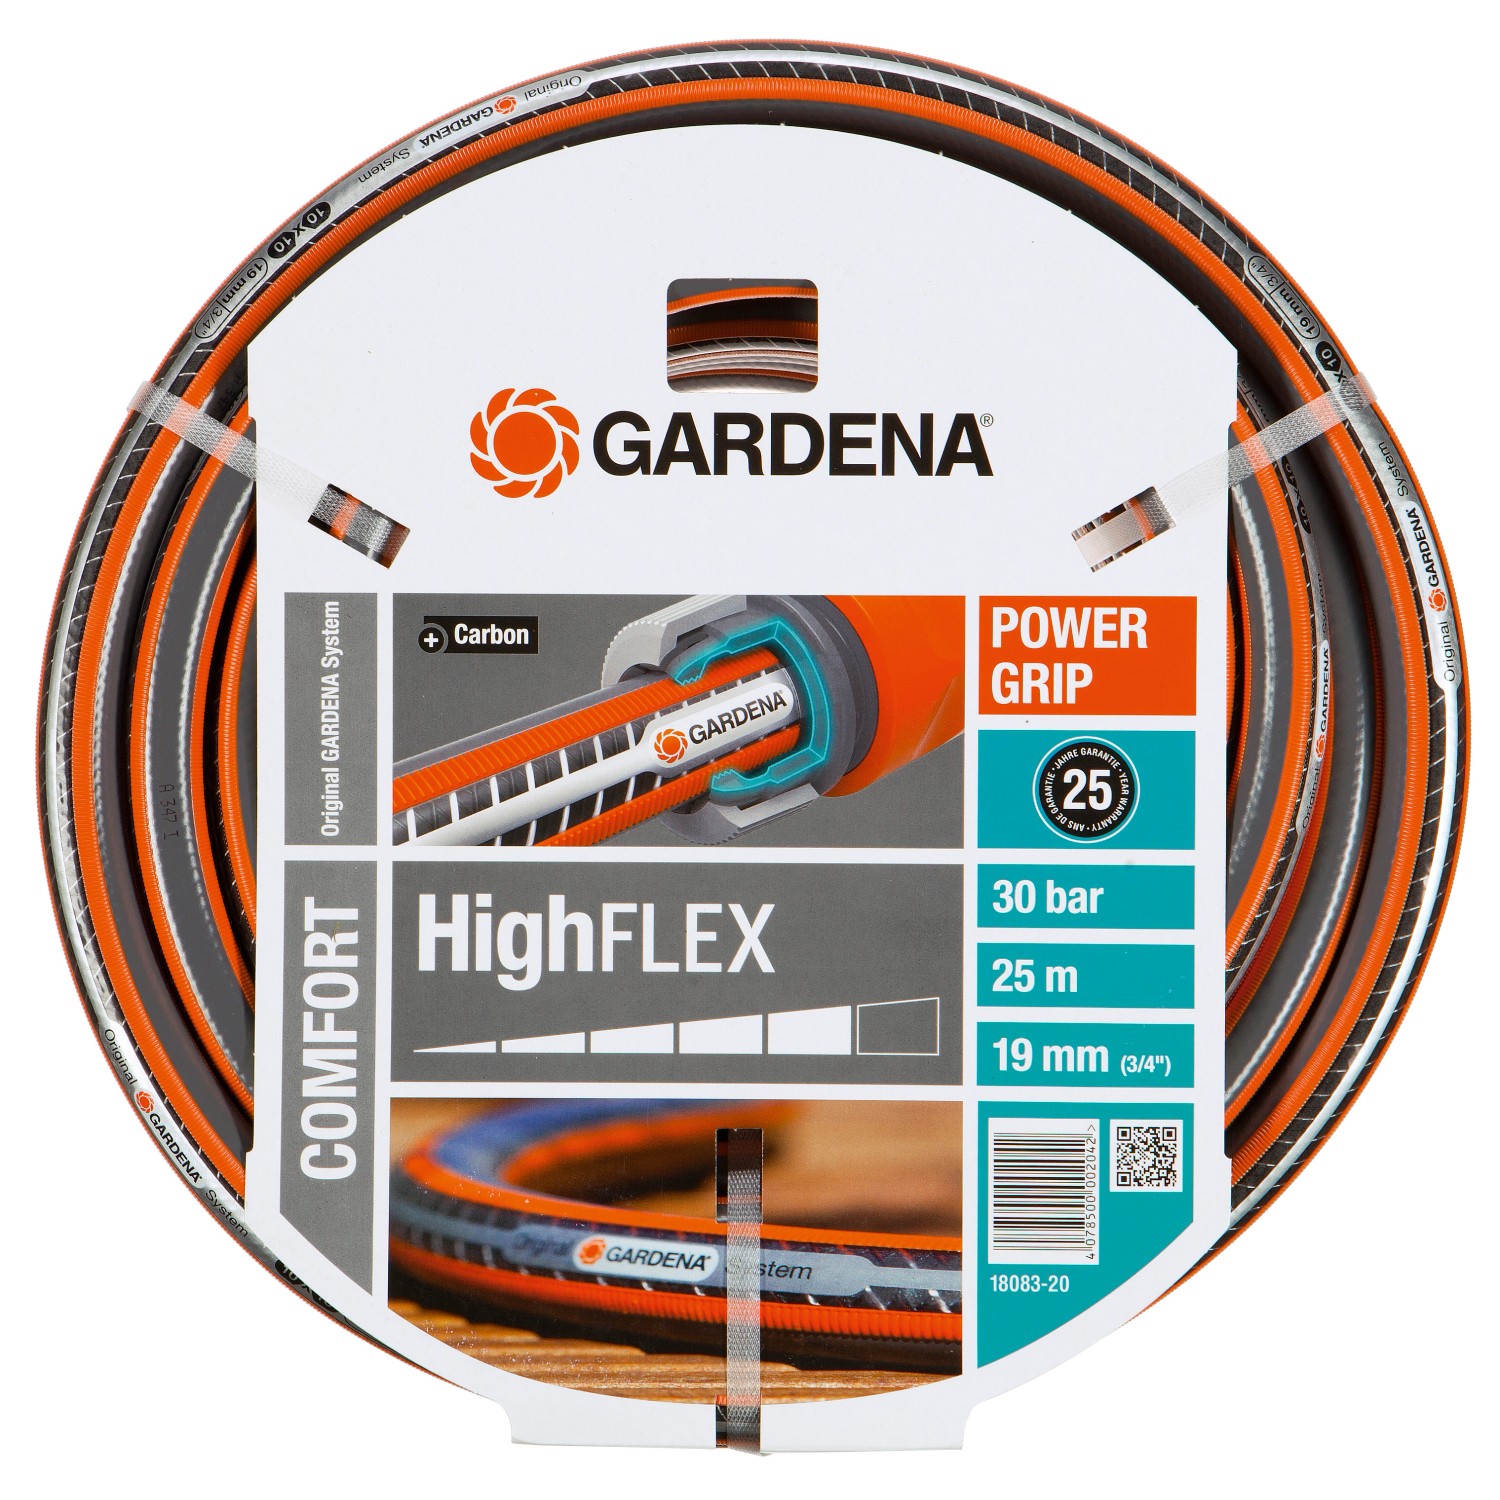 Gardena Gartenschlauch Comfort HighFlex 19 mm (3/4 Zoll) mit PowerGrip 30 bar 25 m